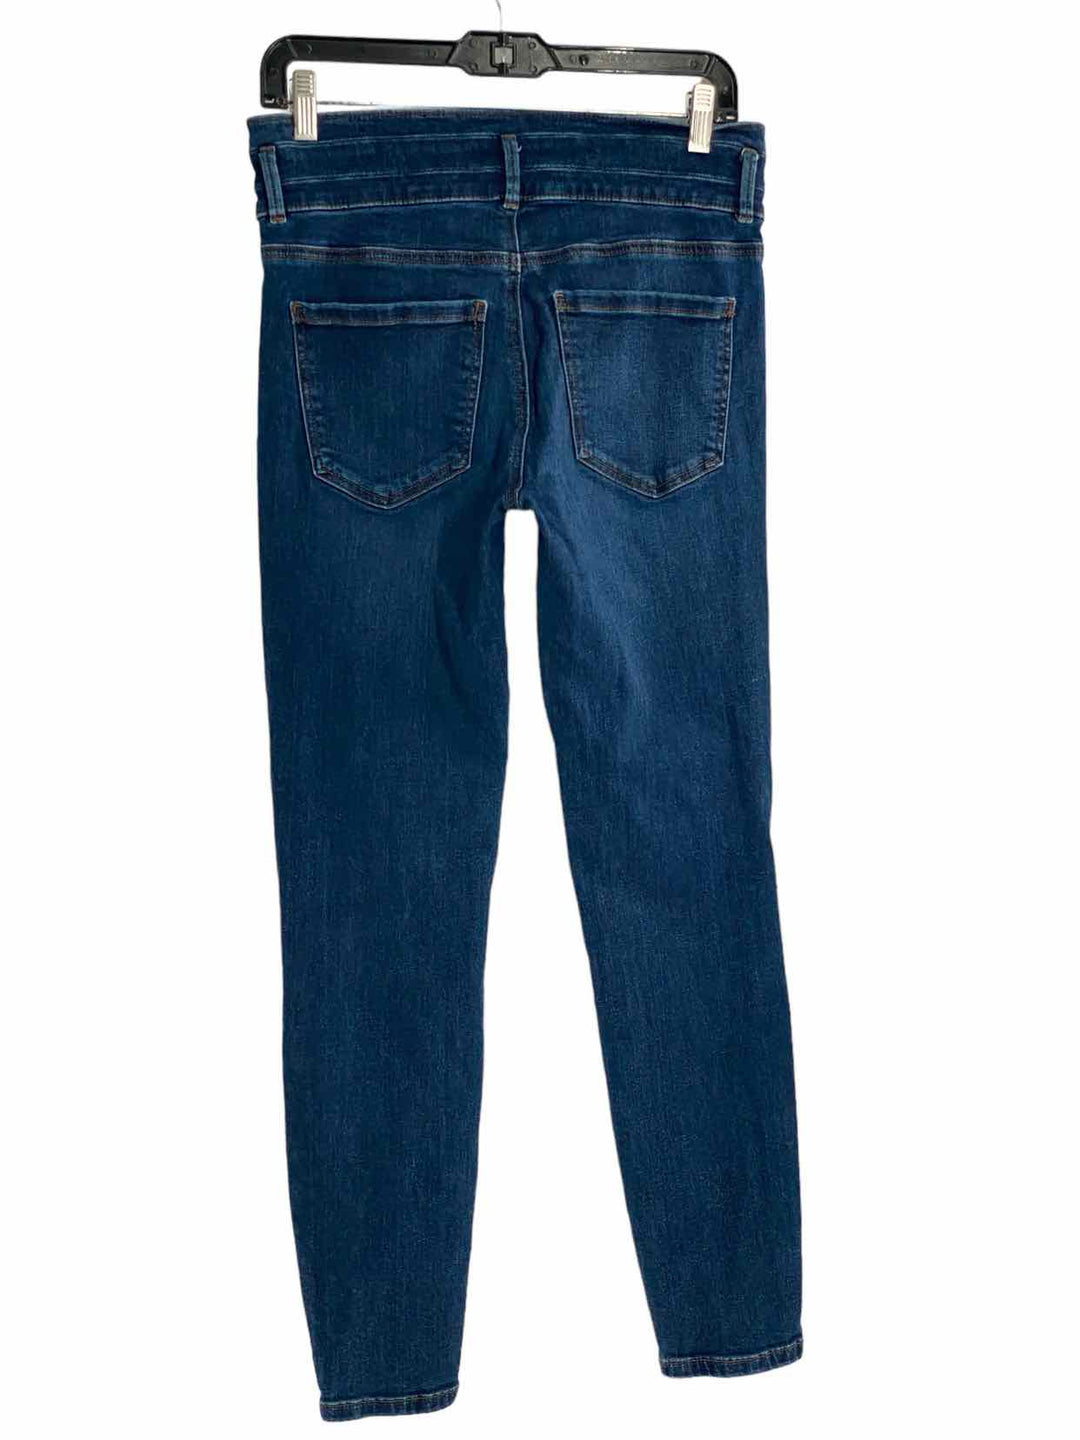 Ann Taylor Size 4 Blue Jeans